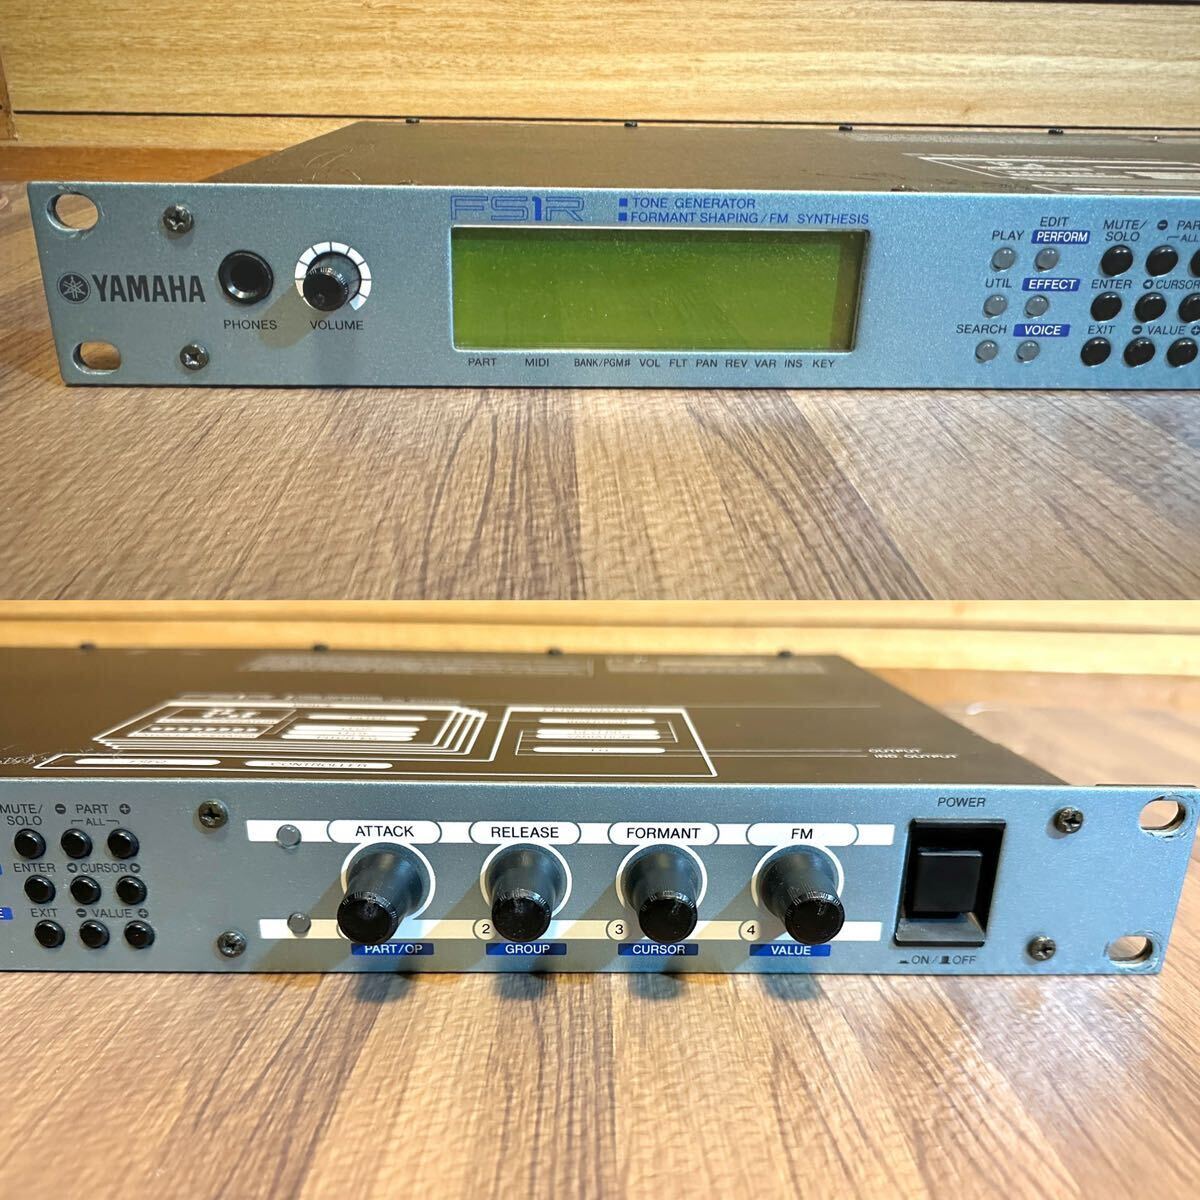 YAMAHA FS1R Yamaha аудио-модуль FM источник звука Forma nto синтезатор цифровой MIDI DX7 редкий DAW DTM контроллер VA